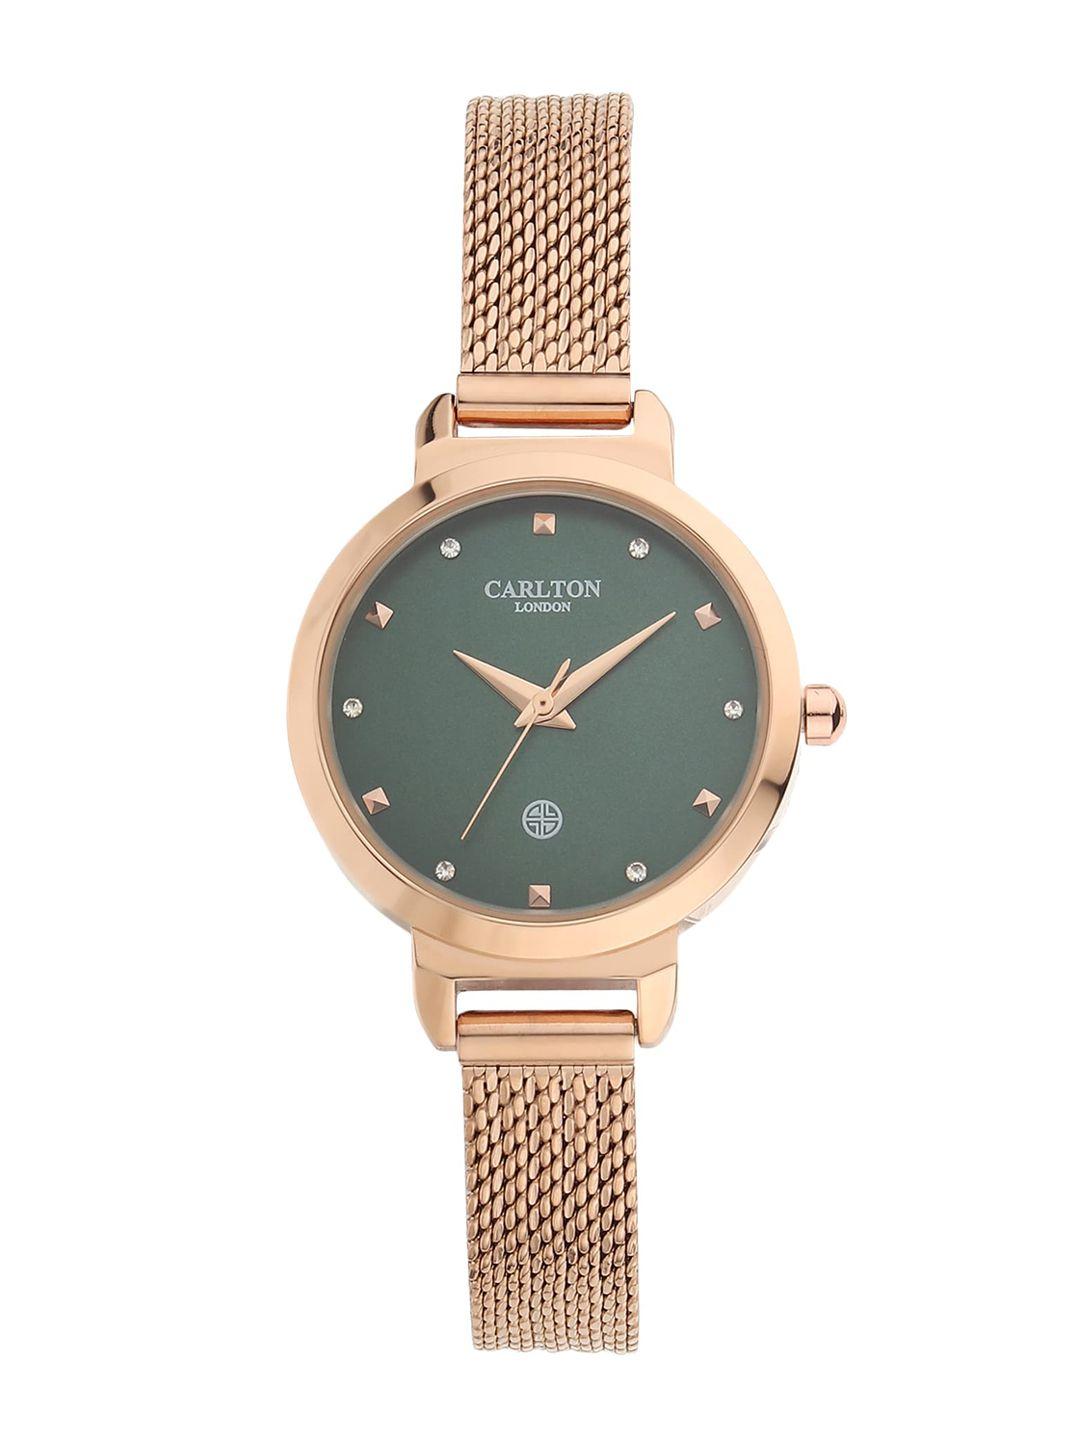 carlton-london-women-rose-gold-&-green-analogue-watch